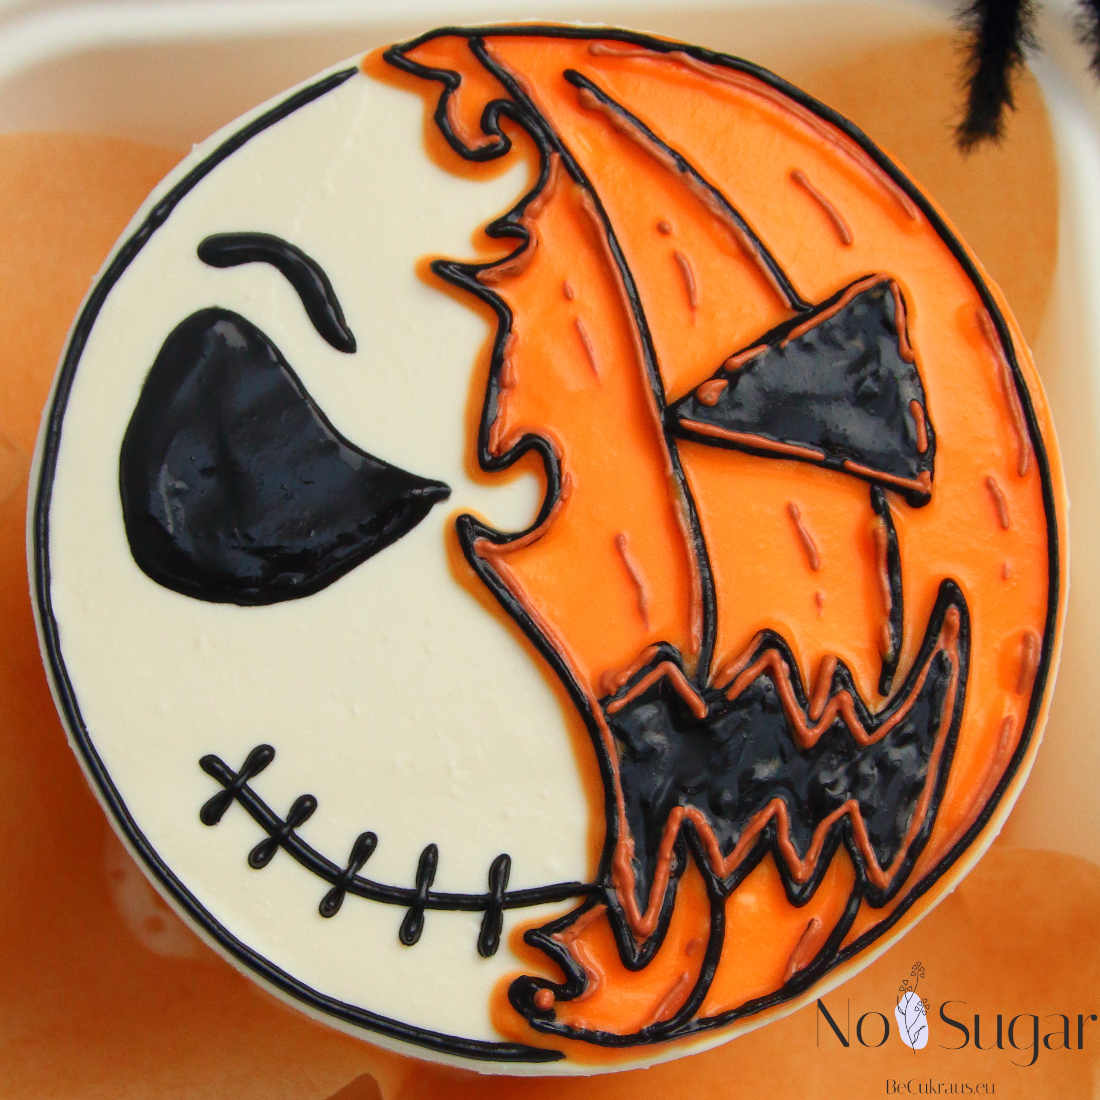 The Nightmare Before Christmas cartoon character Jack Skellington and pumpkin for Halloween